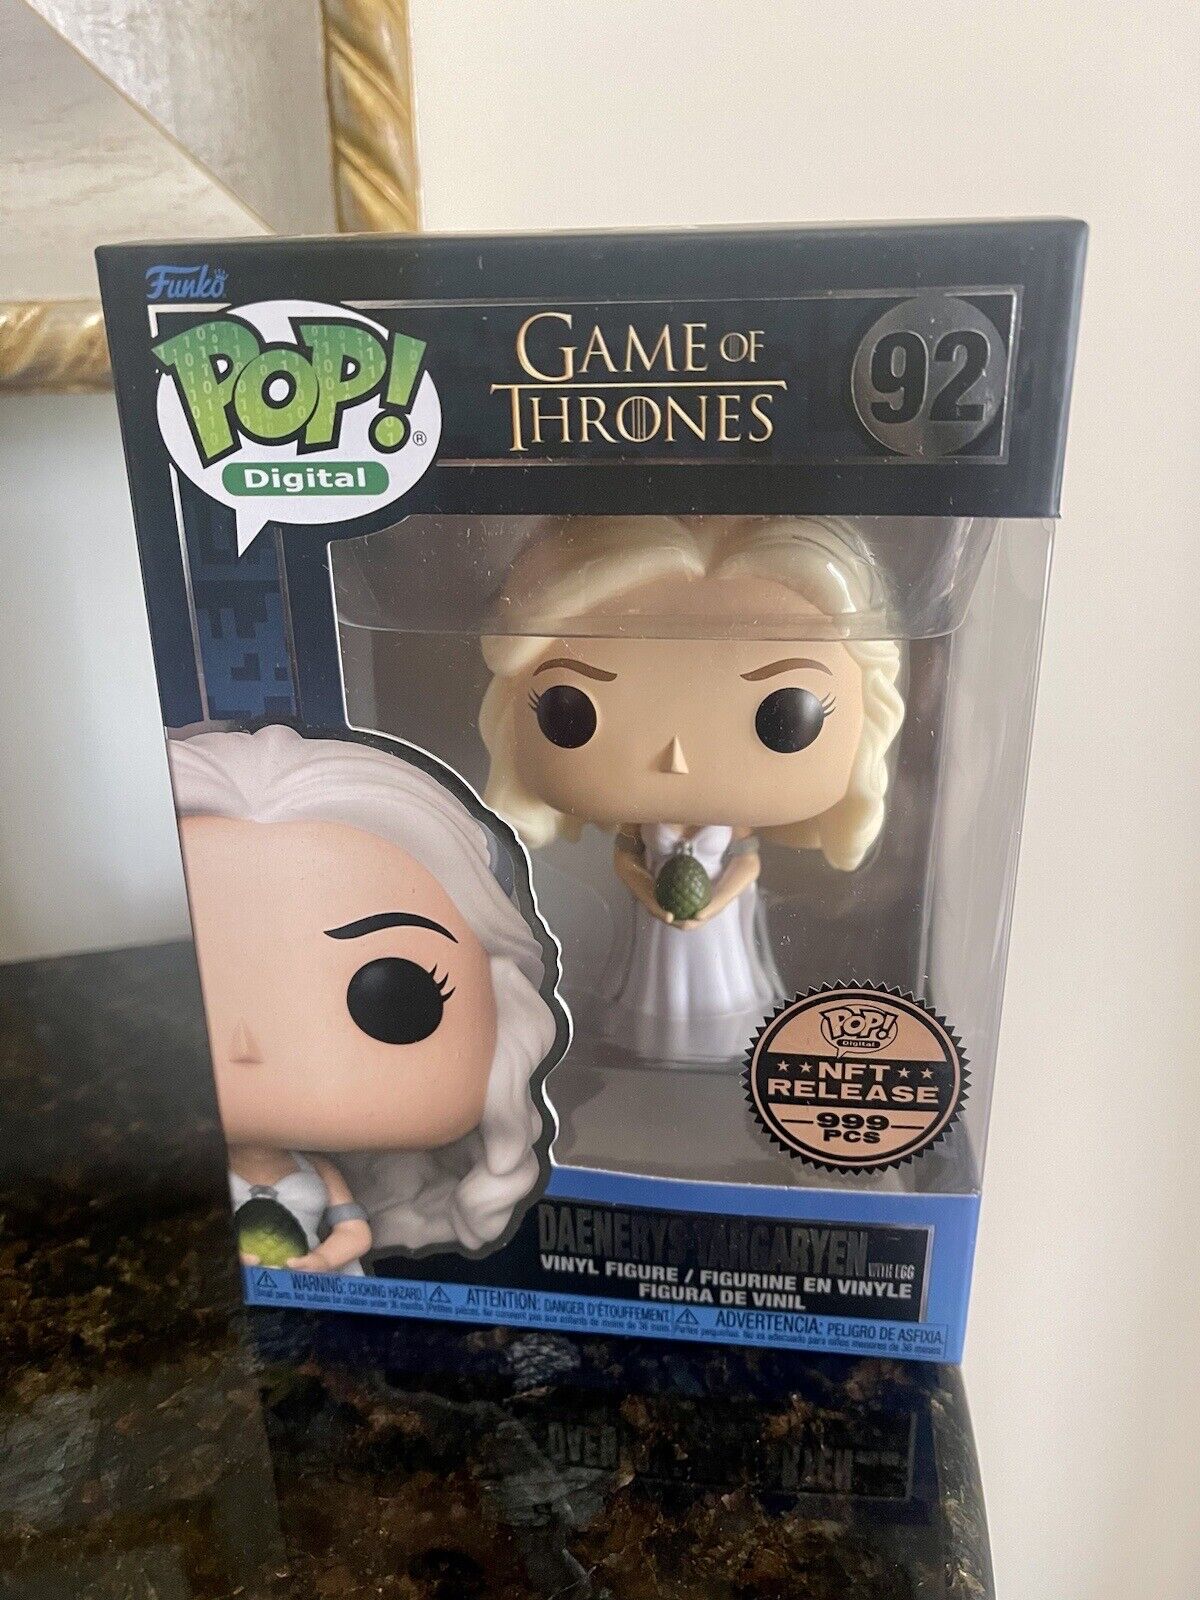 Daenerys Targaryen with Egg LE 999 Grail Funko Pop Digital Game of Thrones